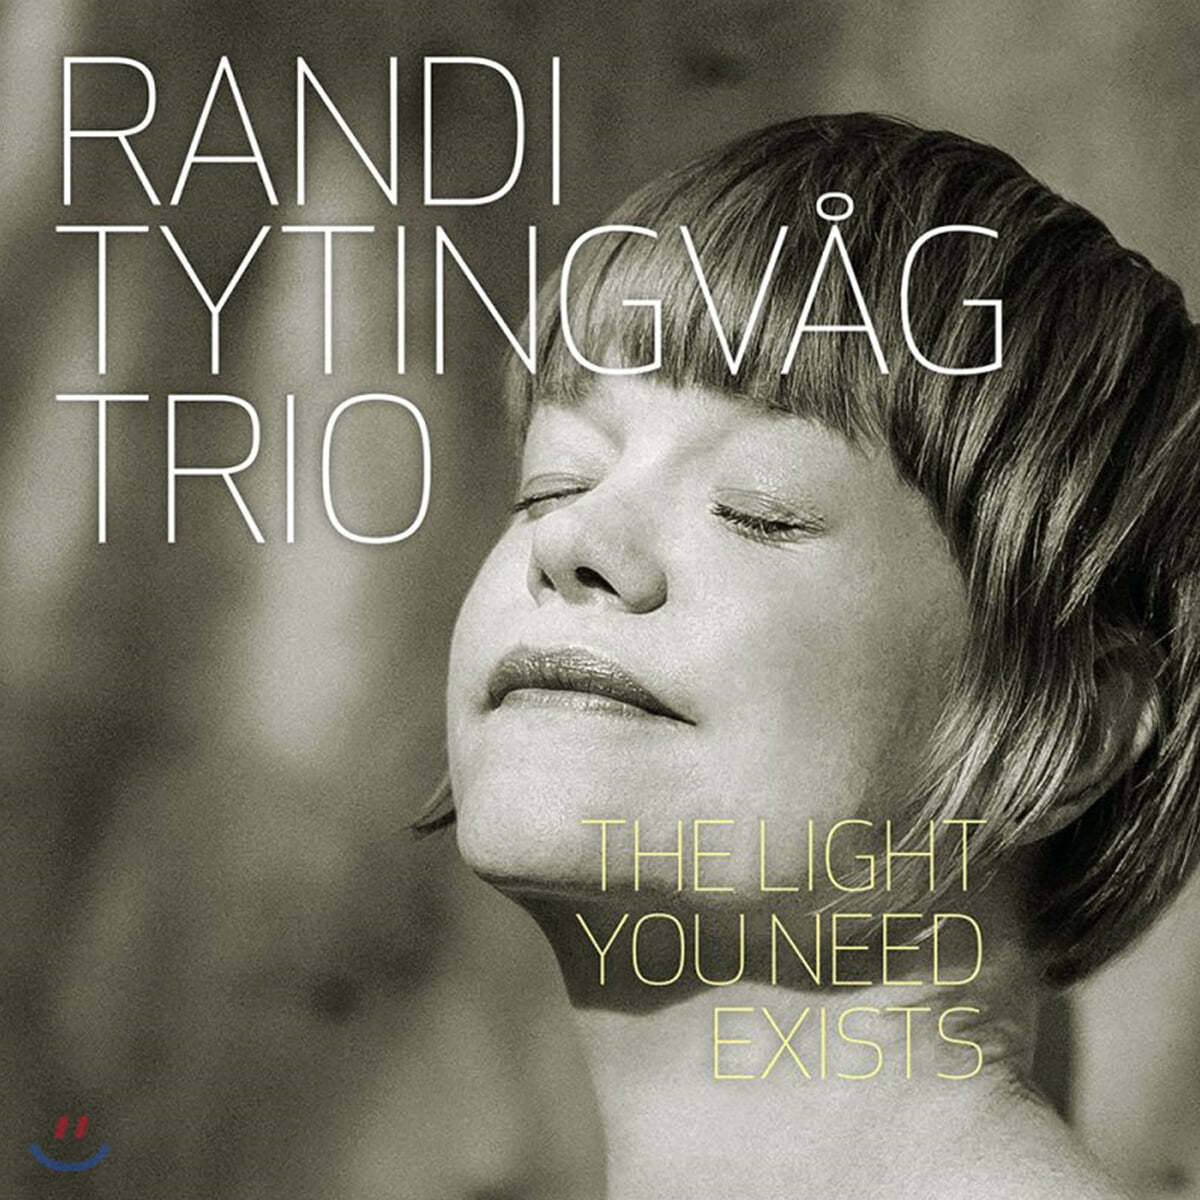 Randi Tytingvag trio (란디 티팅보이 트리오) - The light you need exists [LP]